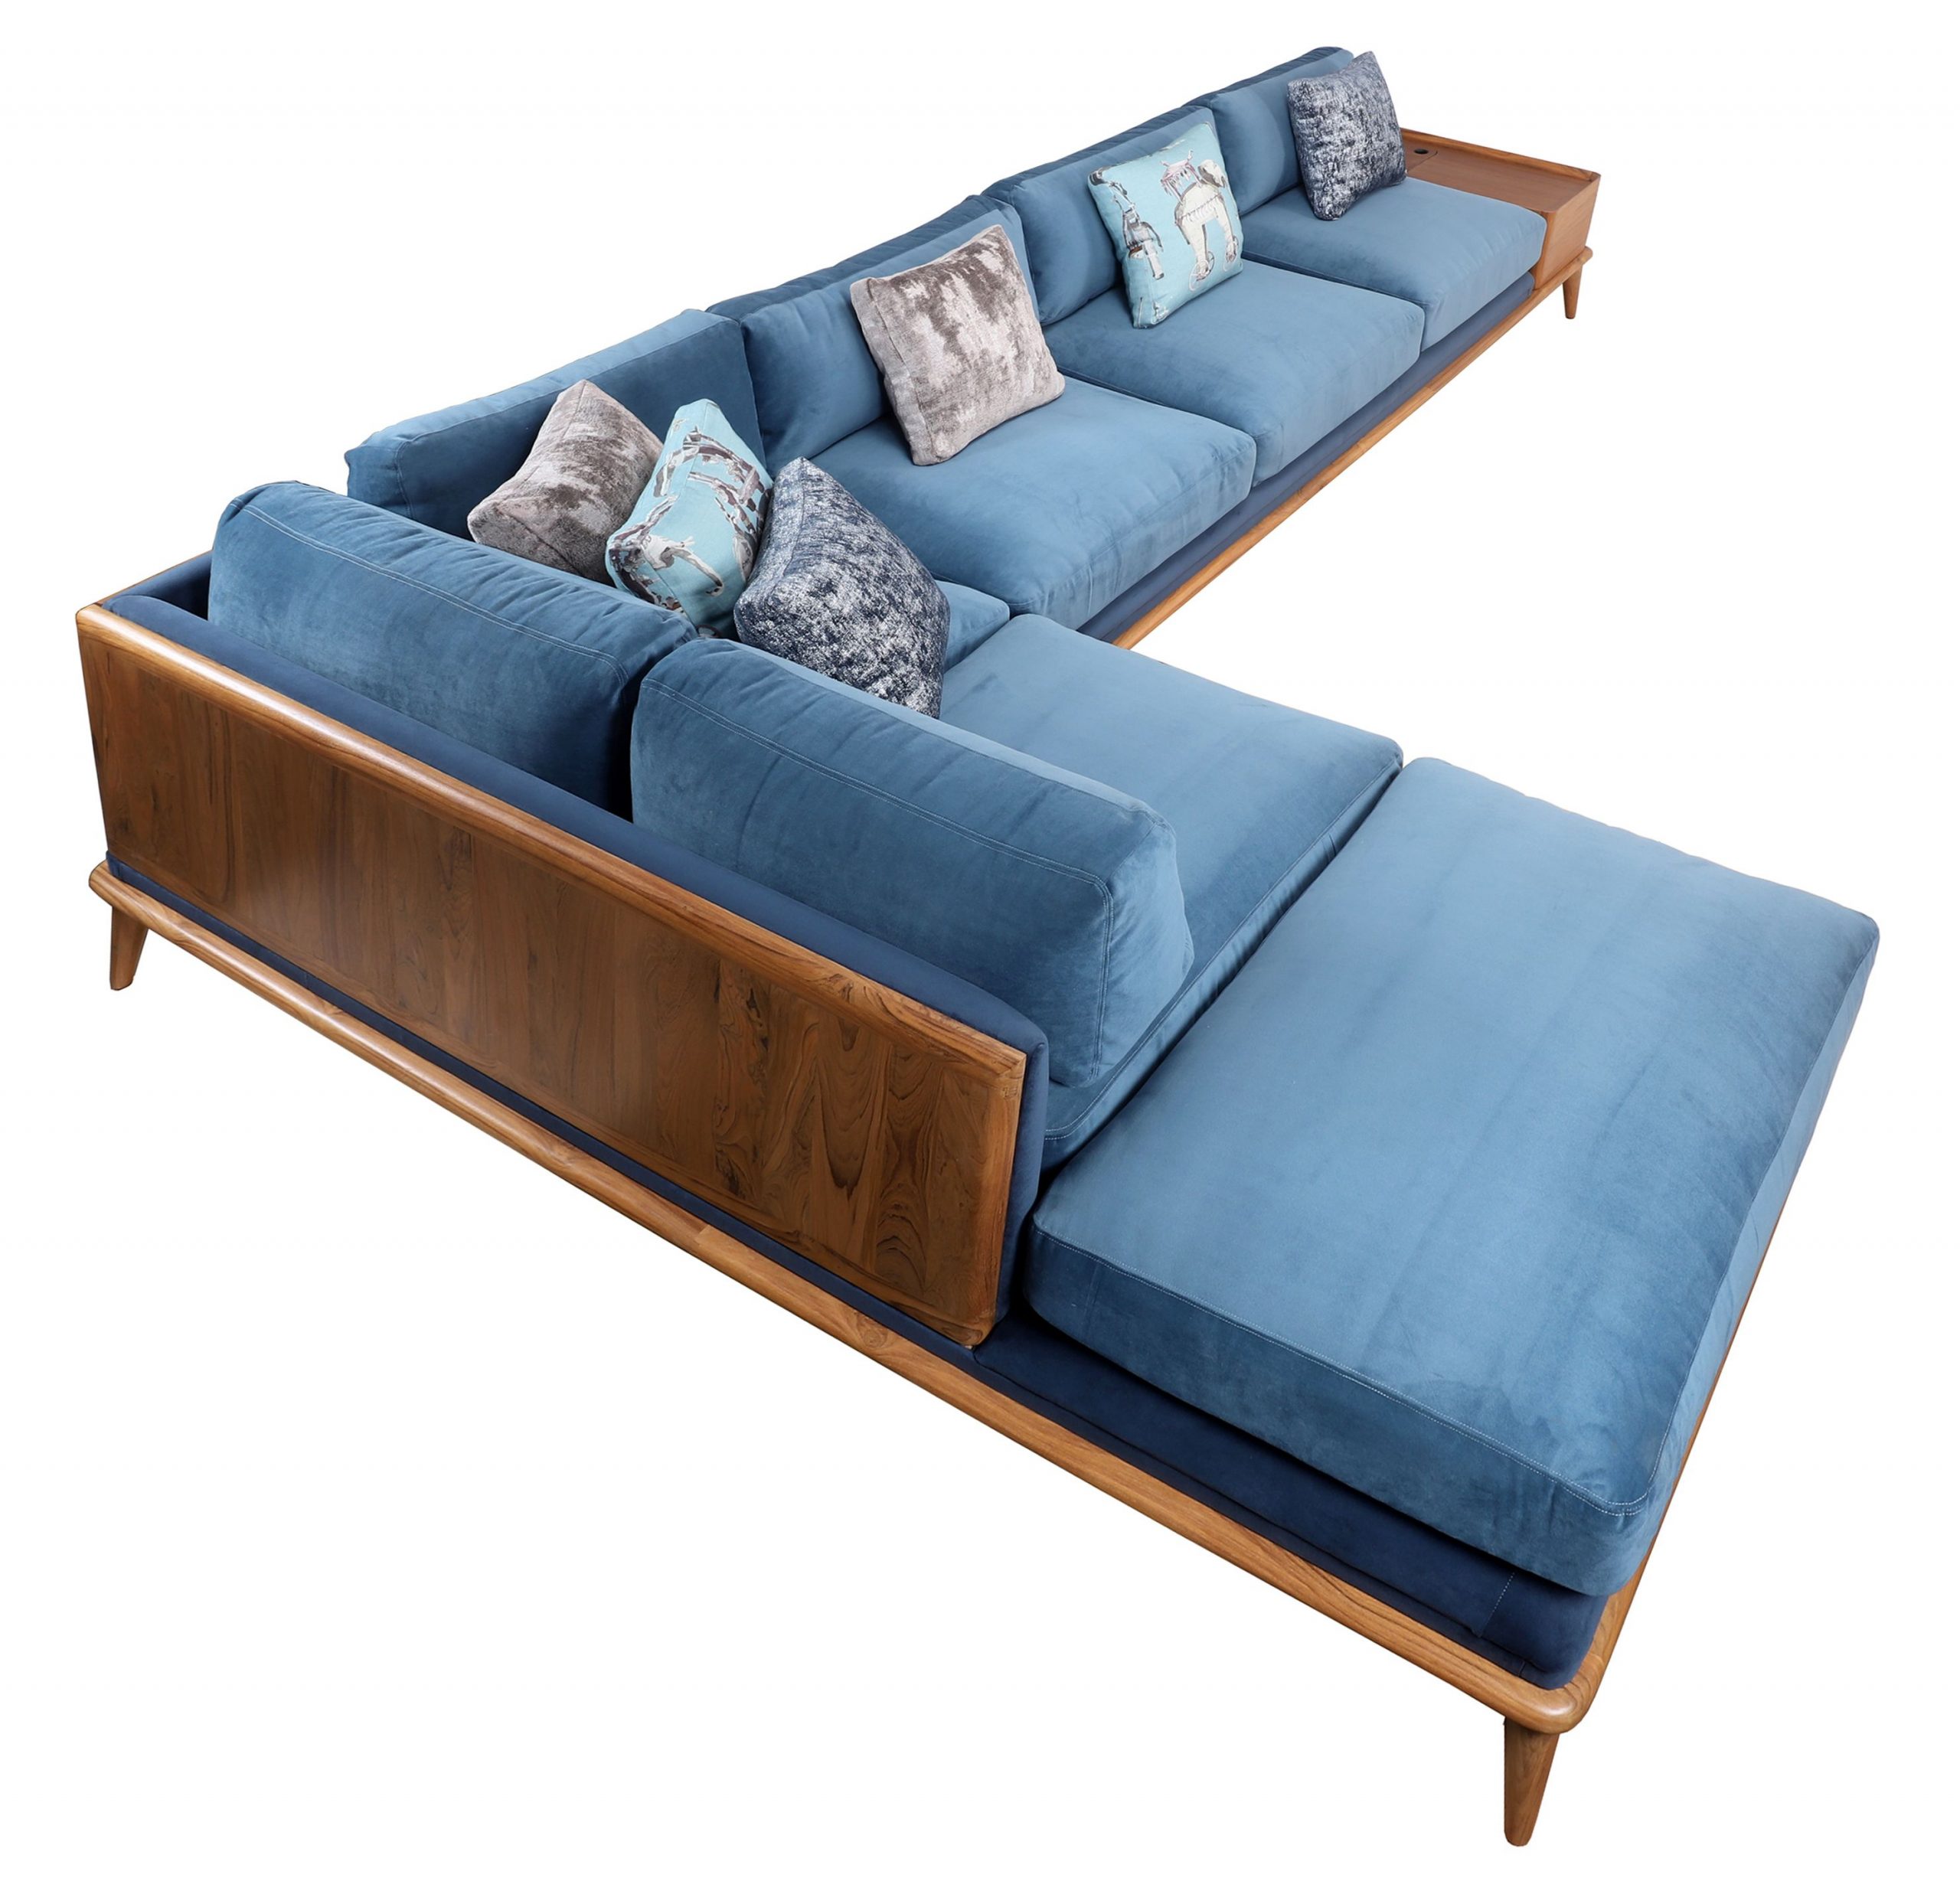 Mysig - L Shaped Sofa: A Round Edged Sofa - Contemporary Sofas & Sectionals - Dering Hall